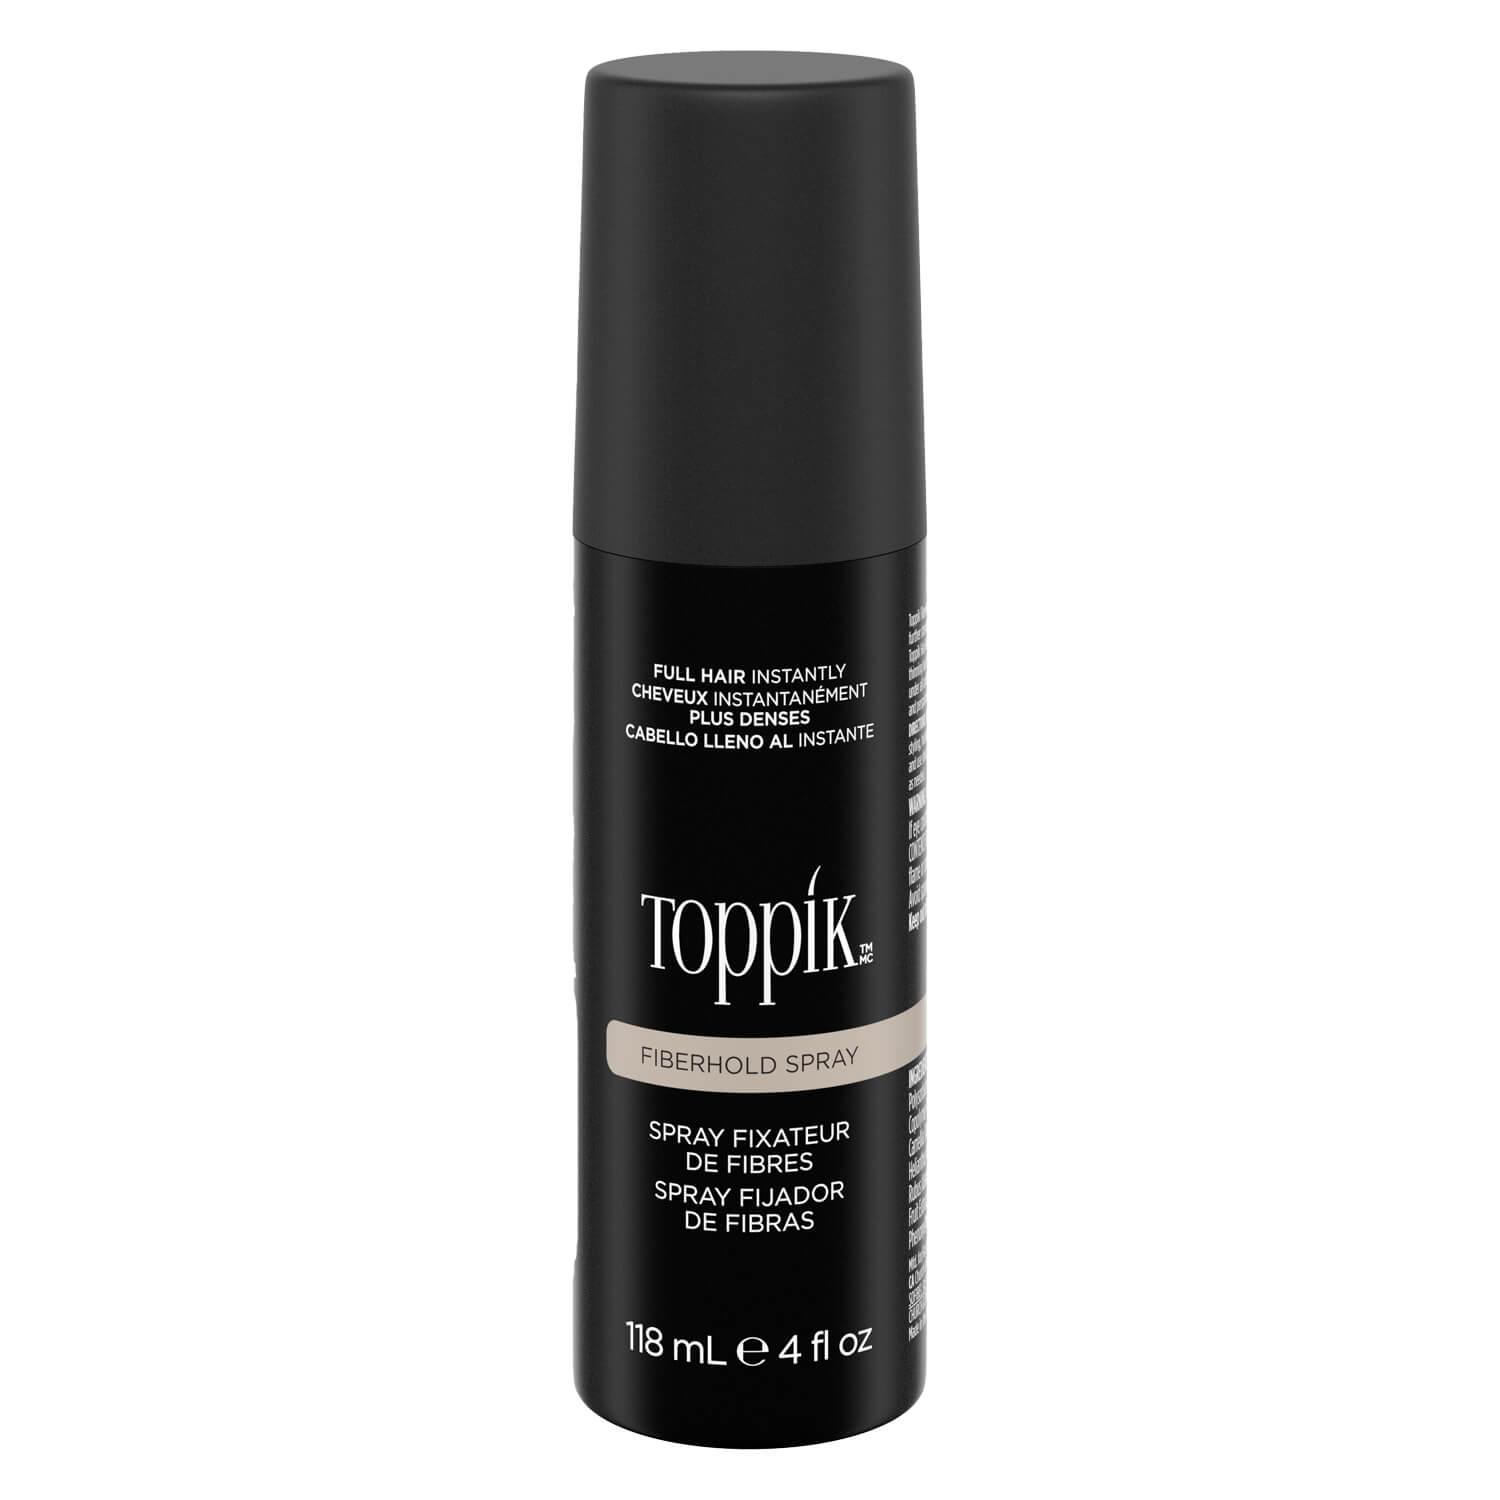 Toppik - Fiberhold Spray